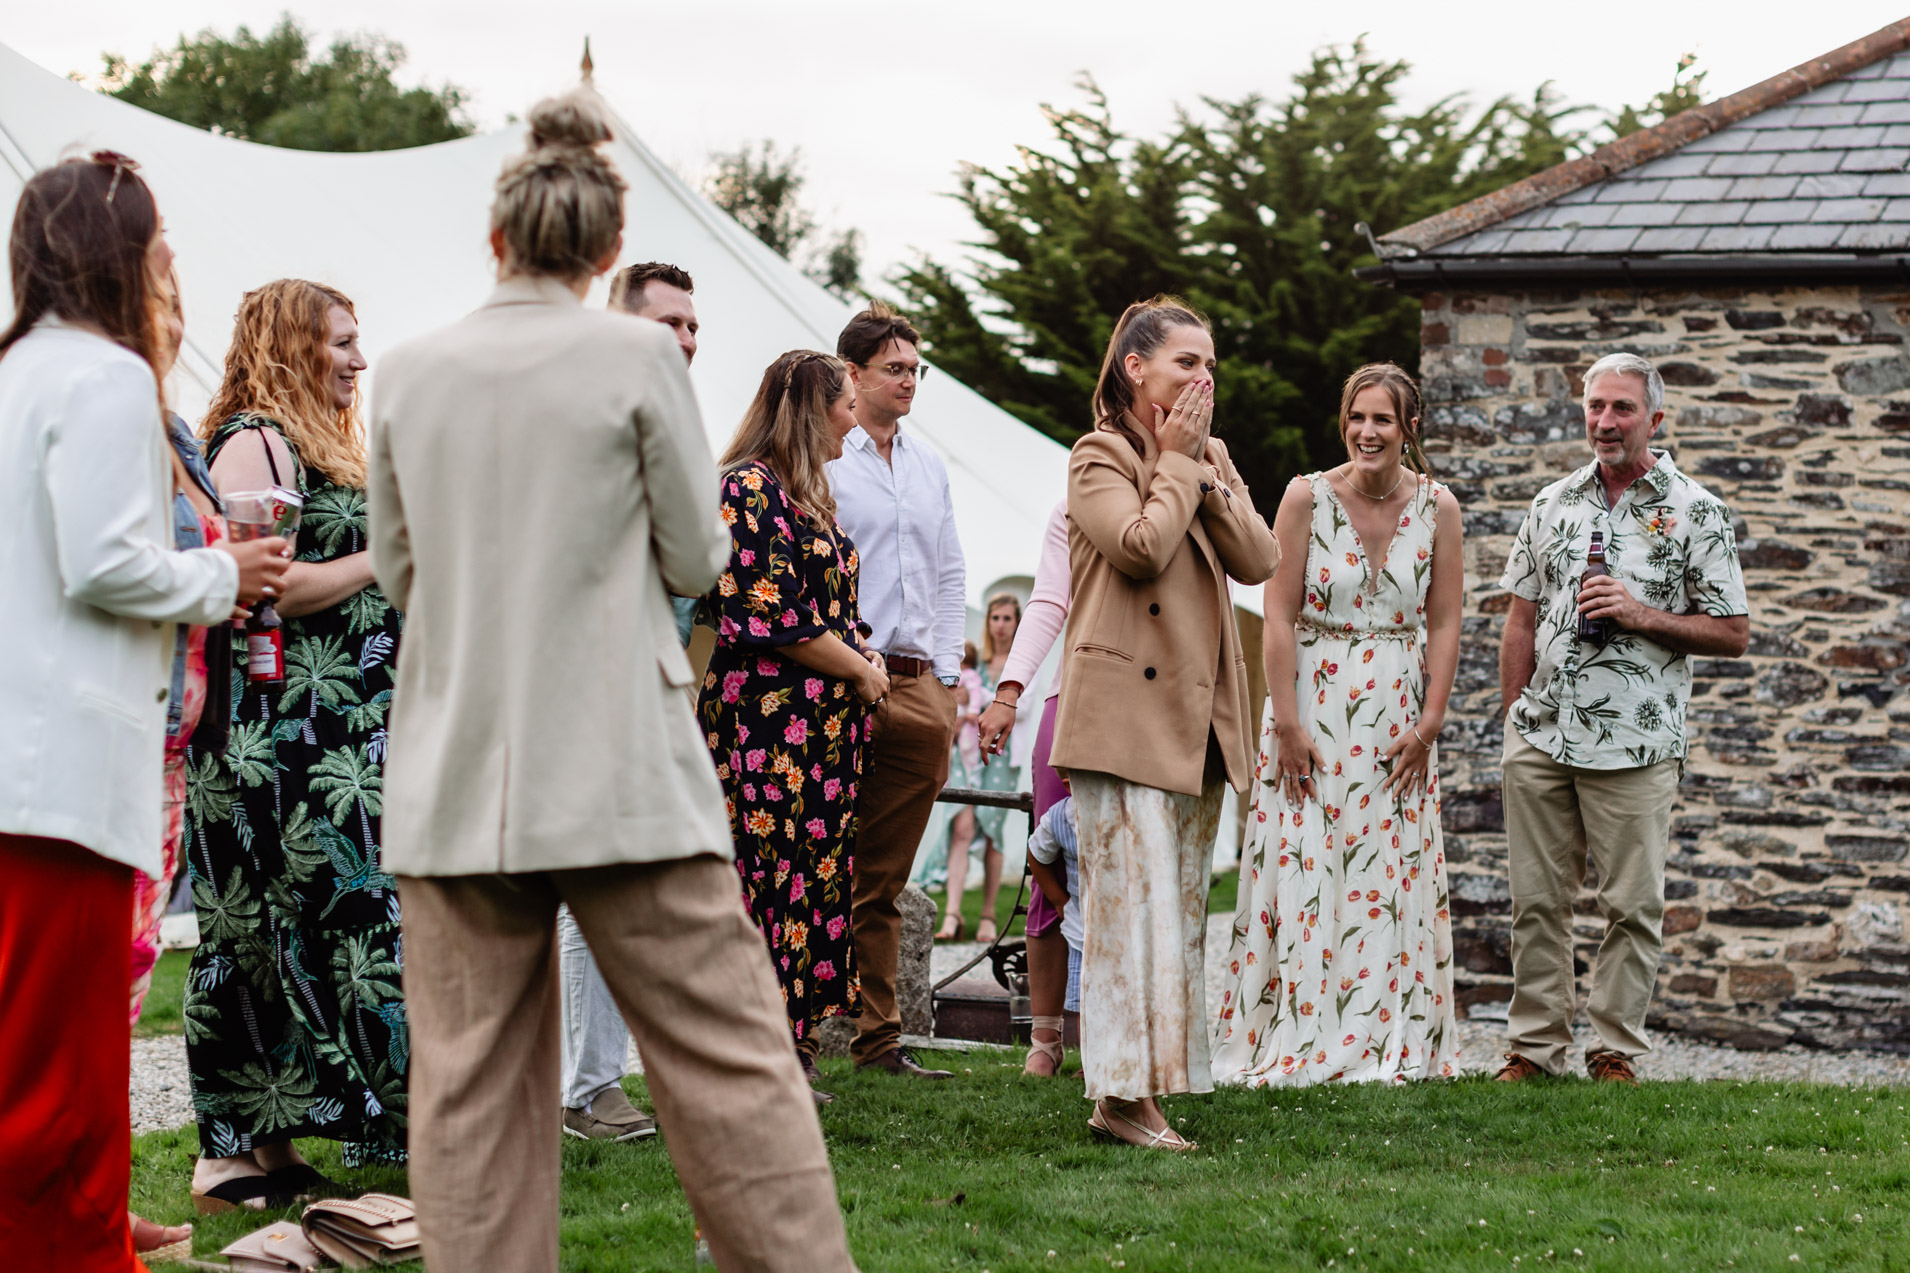 guests having fun with lawn games at wonwood barton wedding